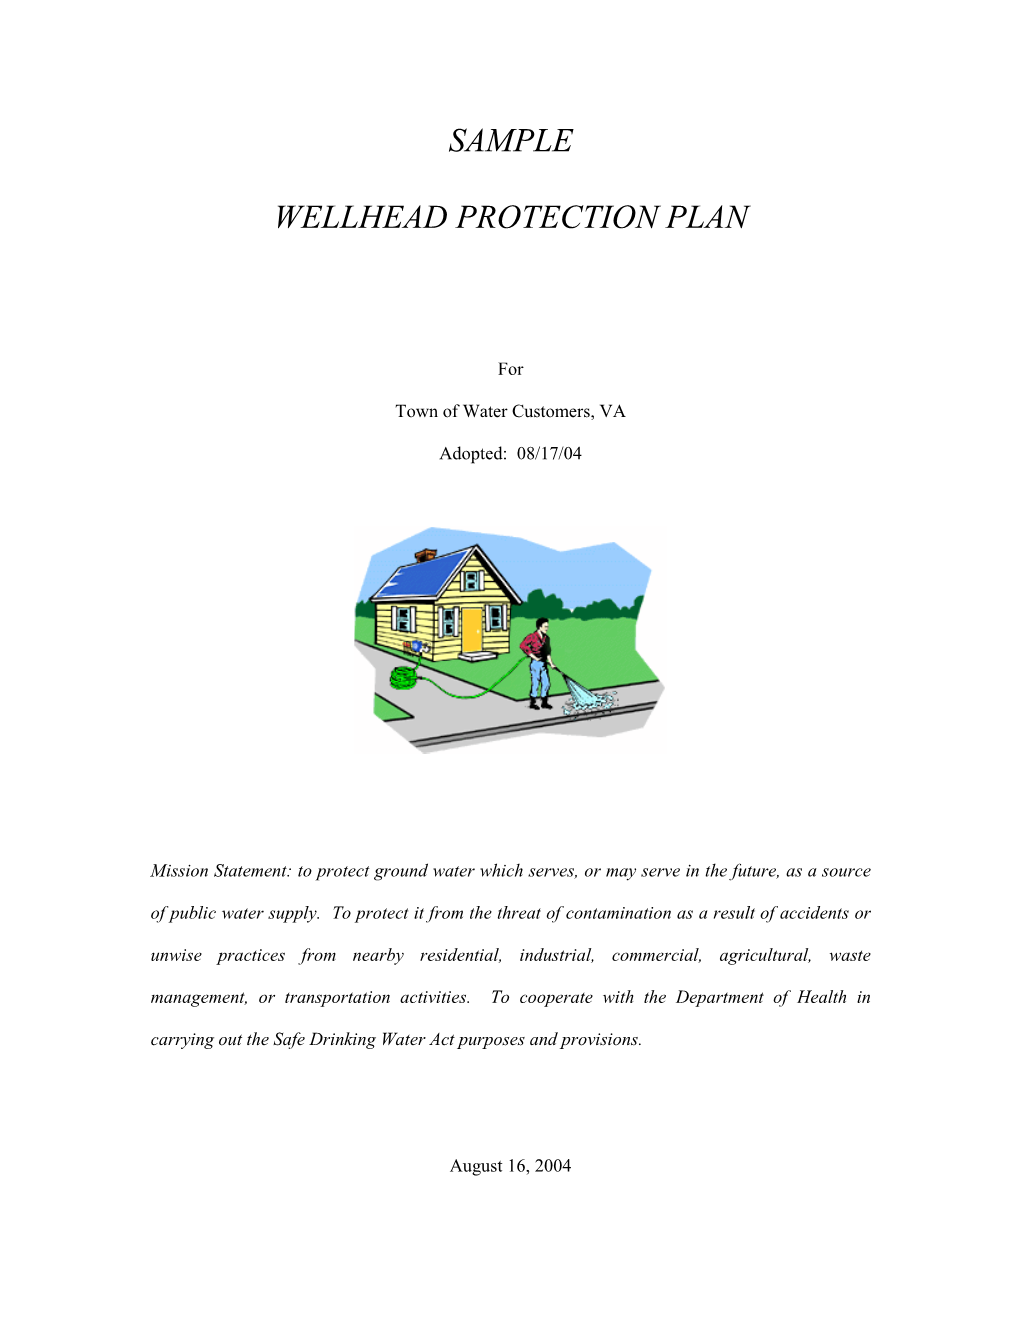 Sample Wellhead Protection Plan